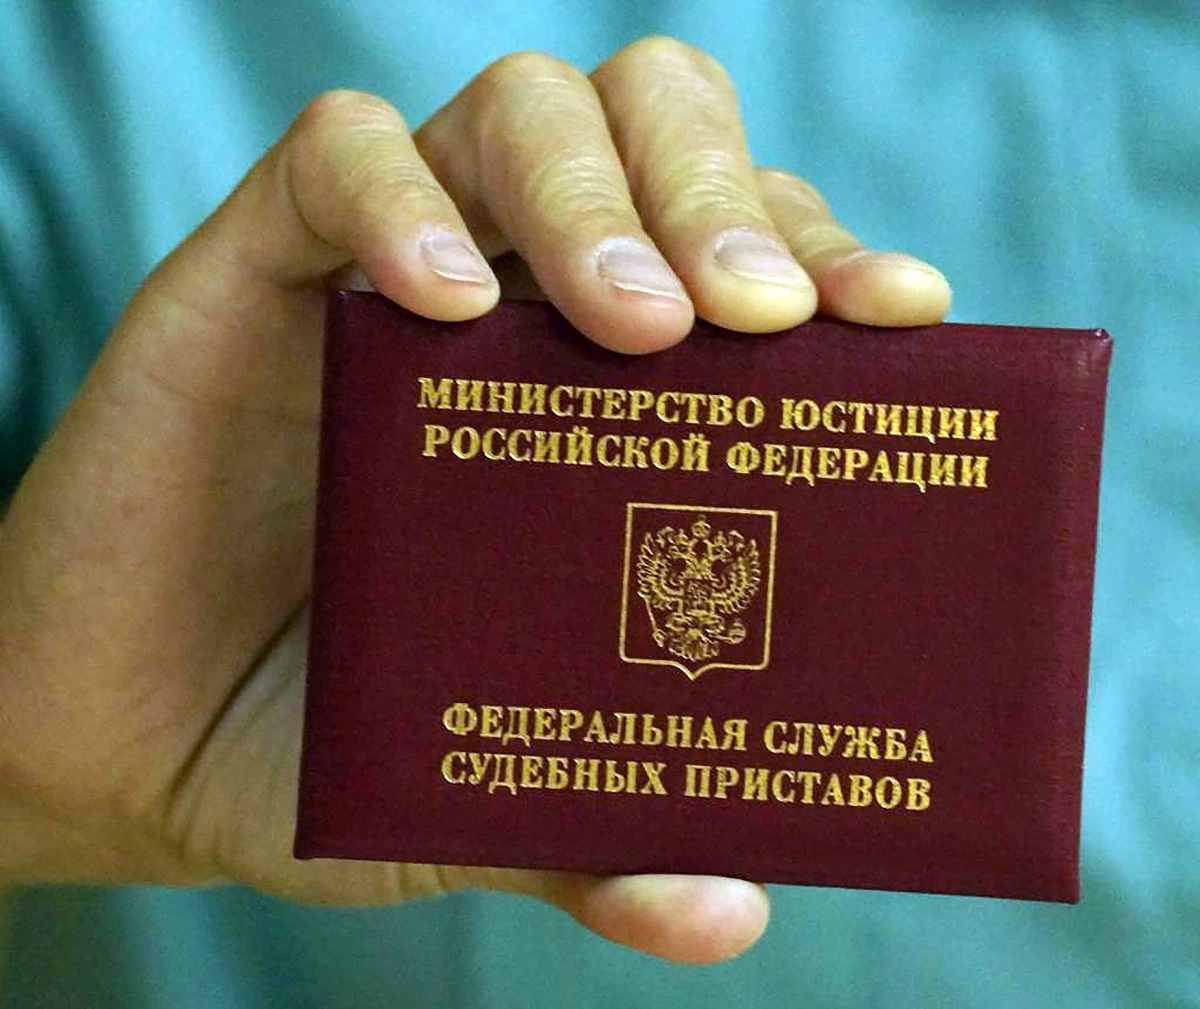 Удостоверение судебного пристава © r34.fssp.gov.ru